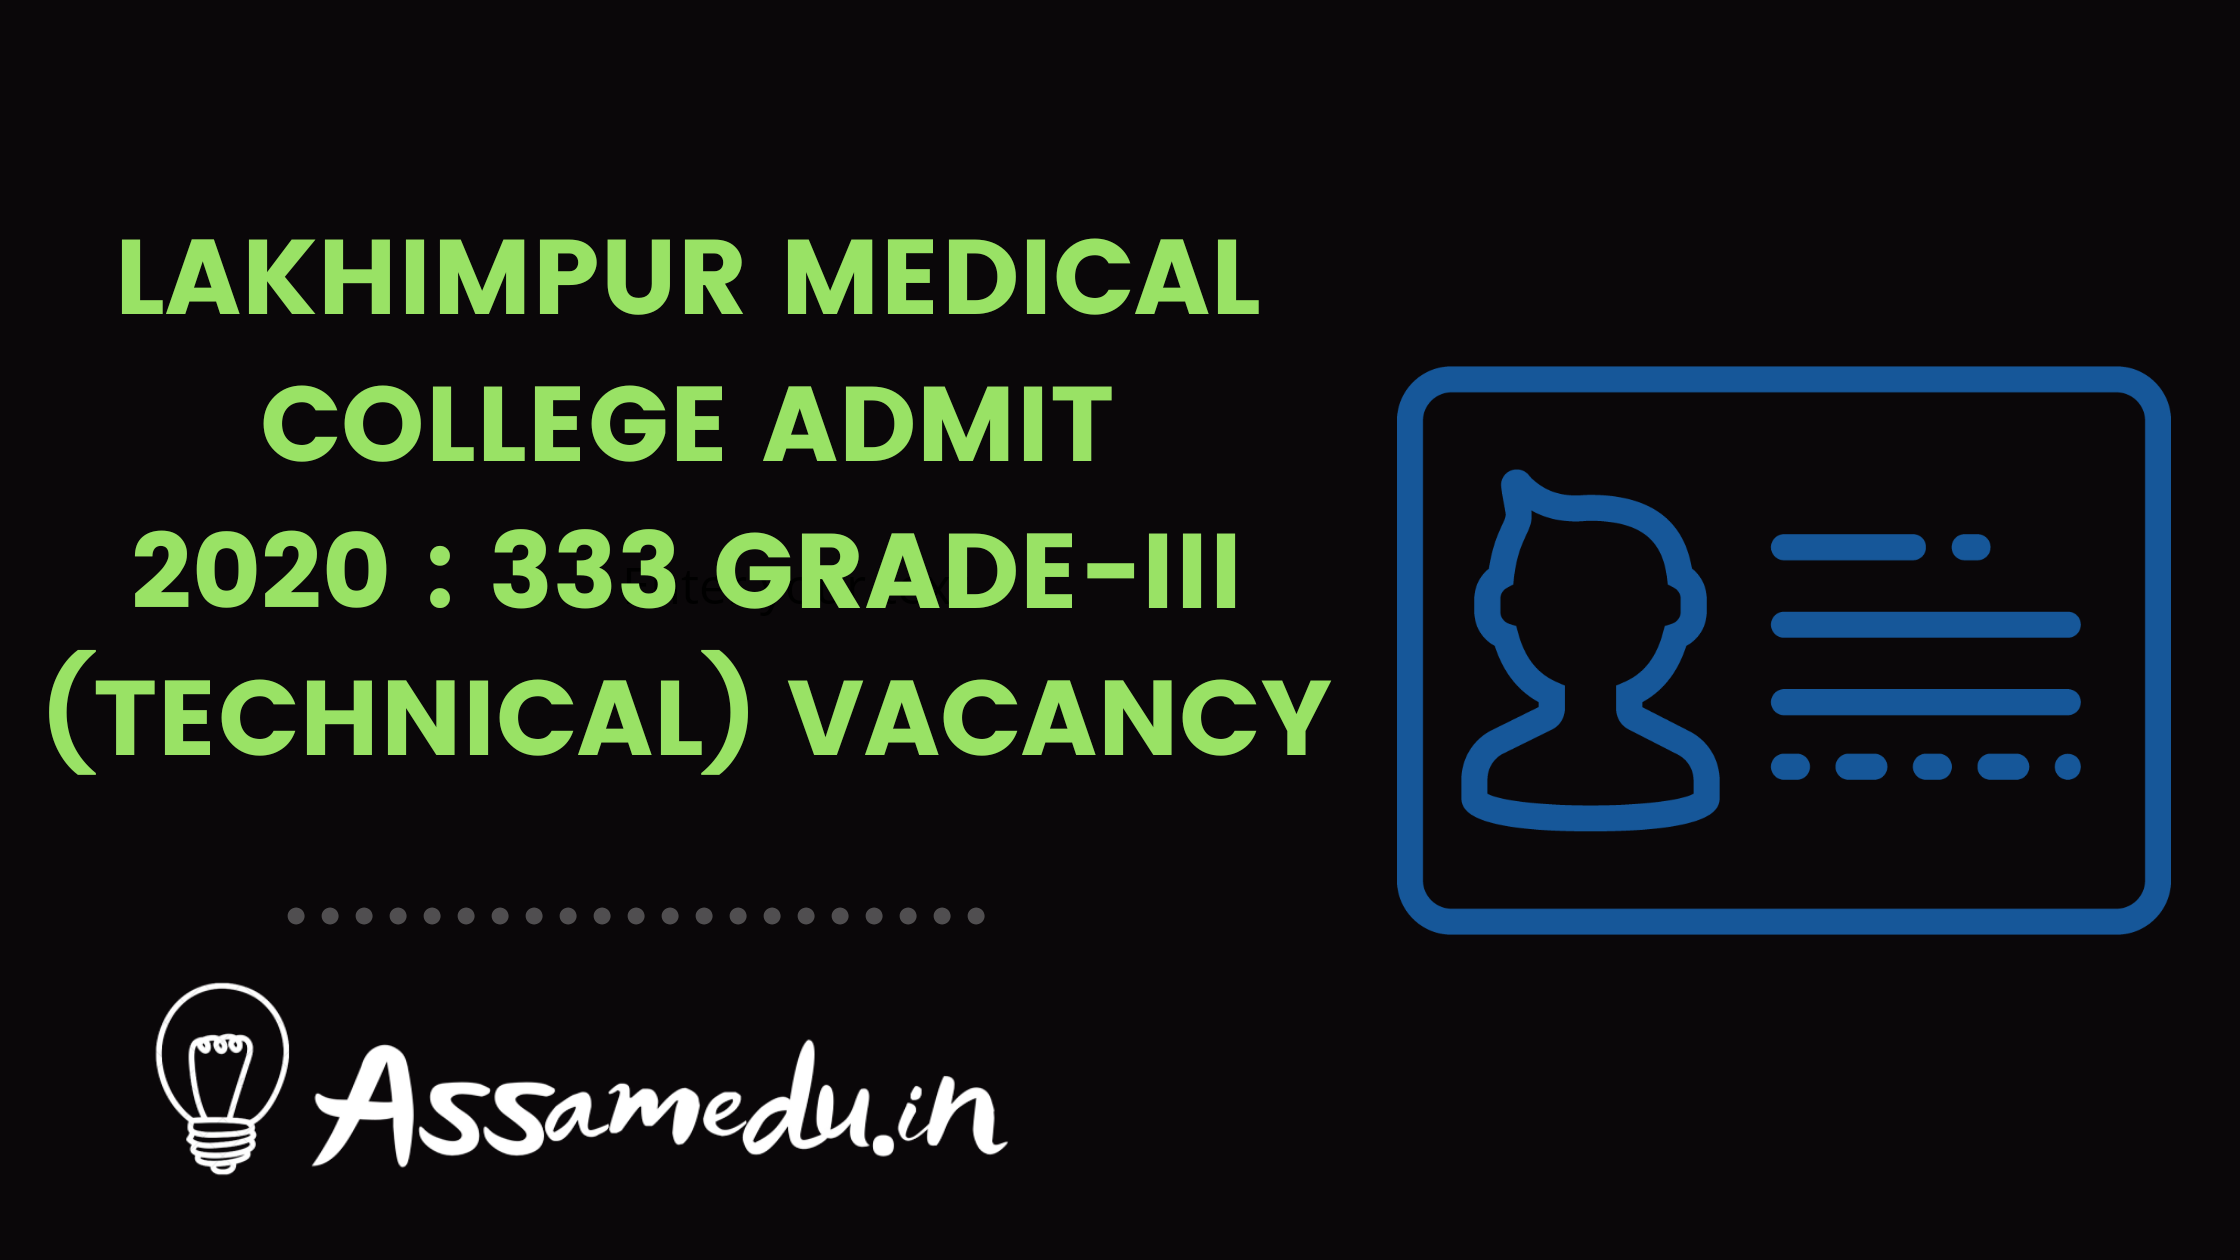 Lakhimpur Medical College Admit Card 2020